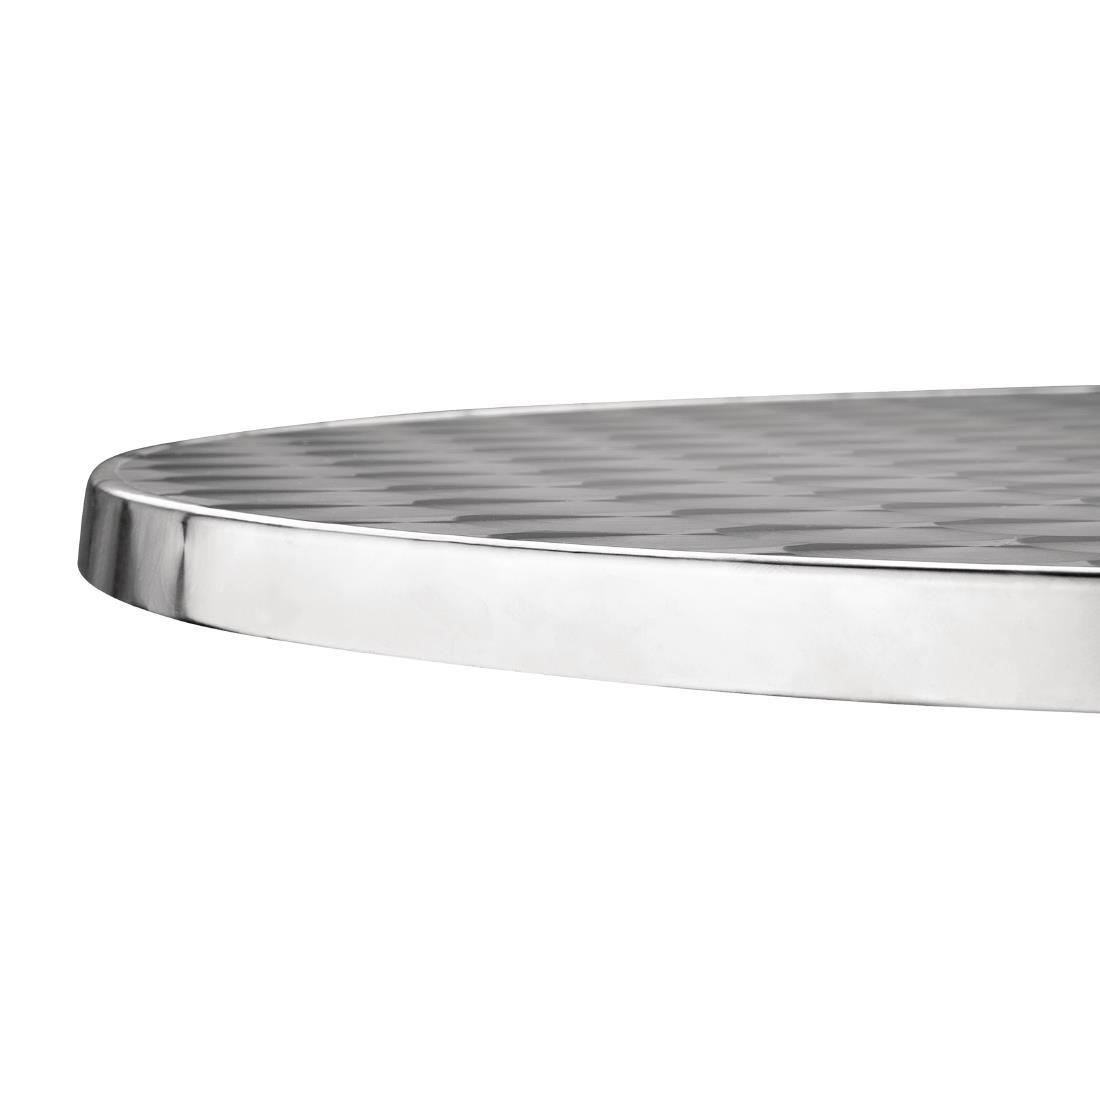 Bolero Flip Top Table Stainless Steel 600mm - U423  - 4